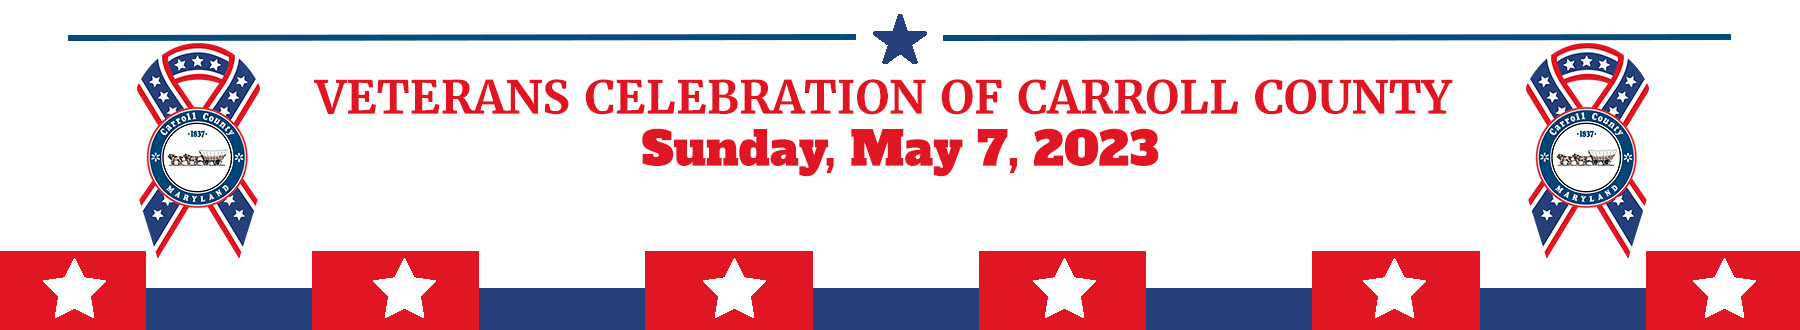 Veterans Celebration of Carroll County Flyer